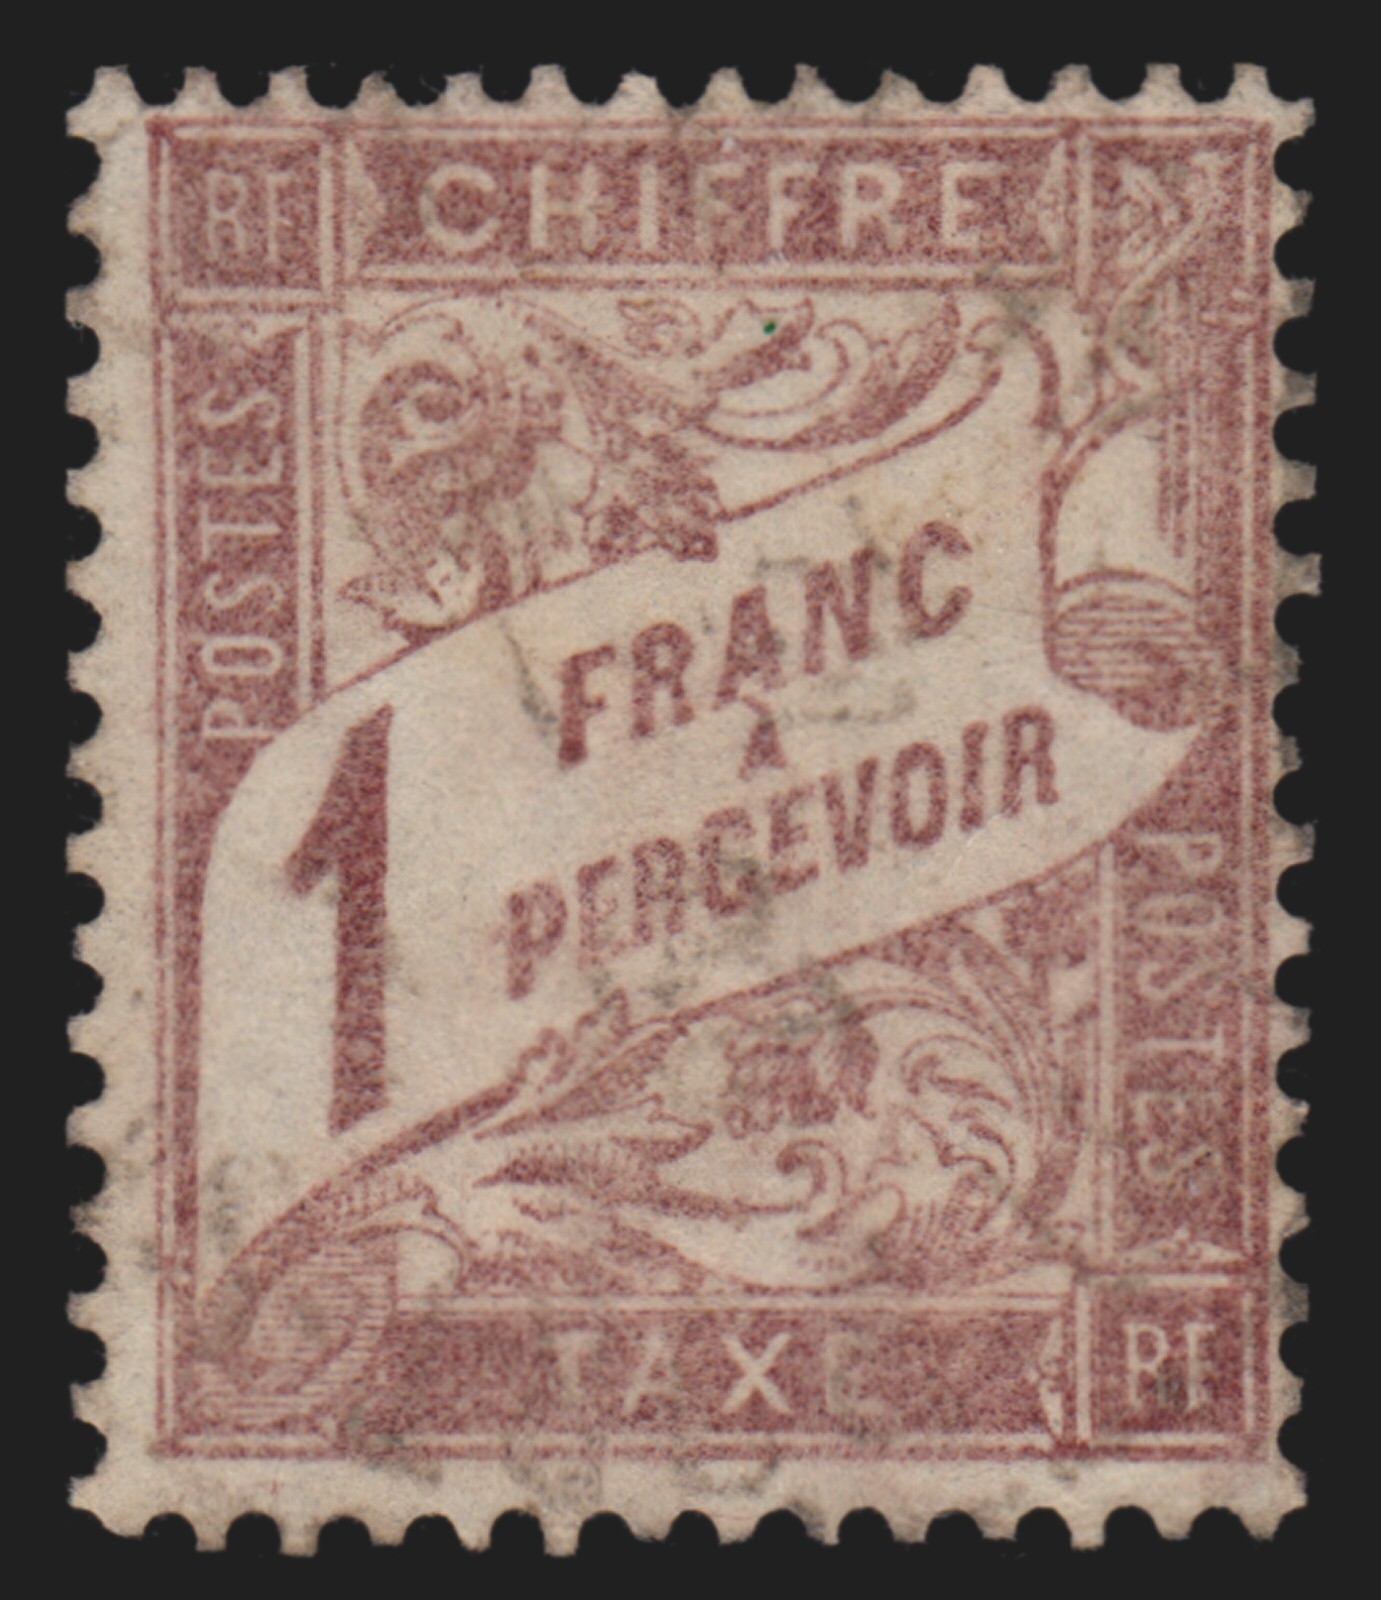 Timbres-Taxe n°25, Type Duval 1884, 1fr marron, oblitéré - TB